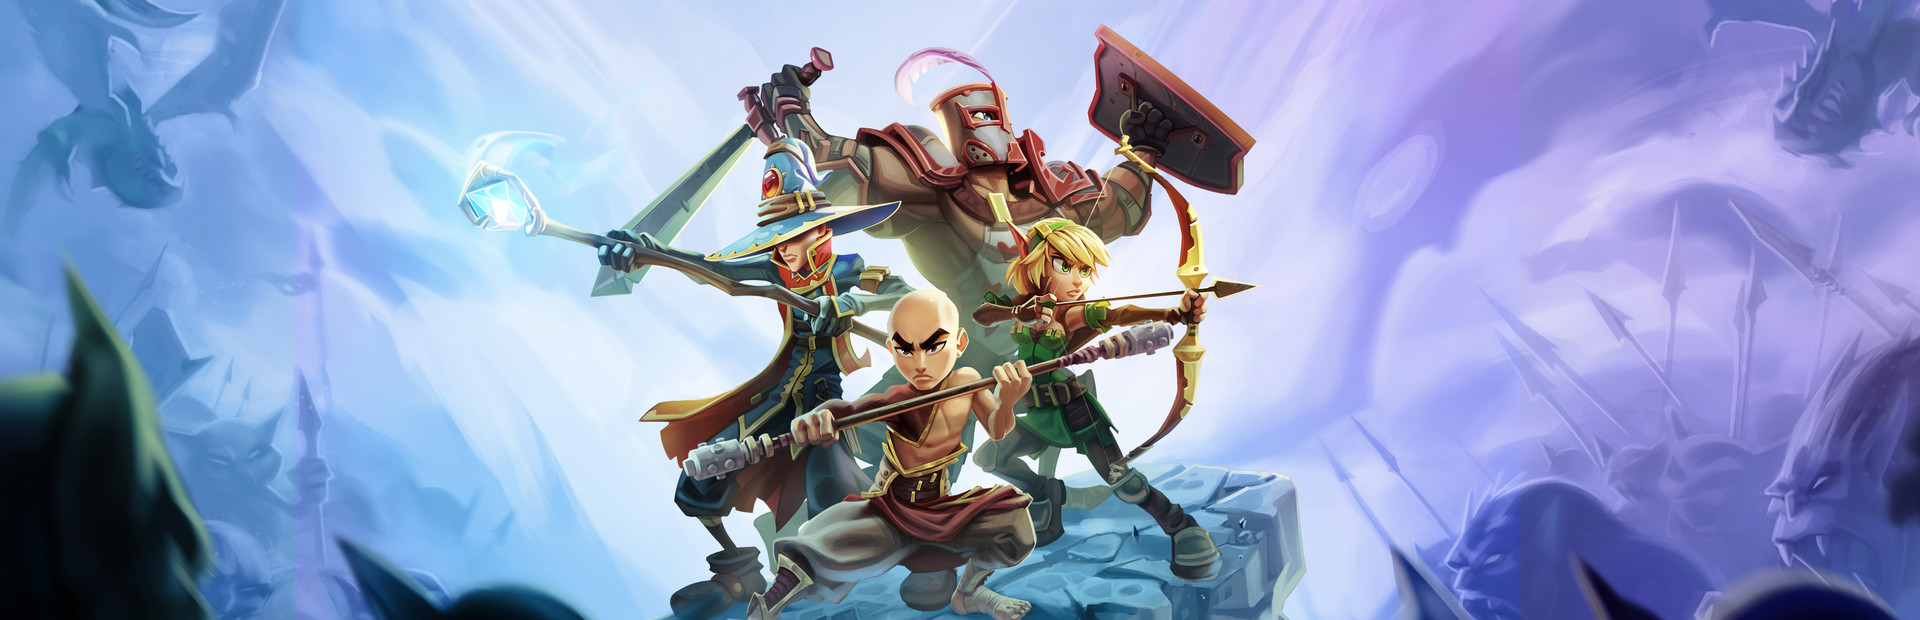 Dungeon Defenders II cover image